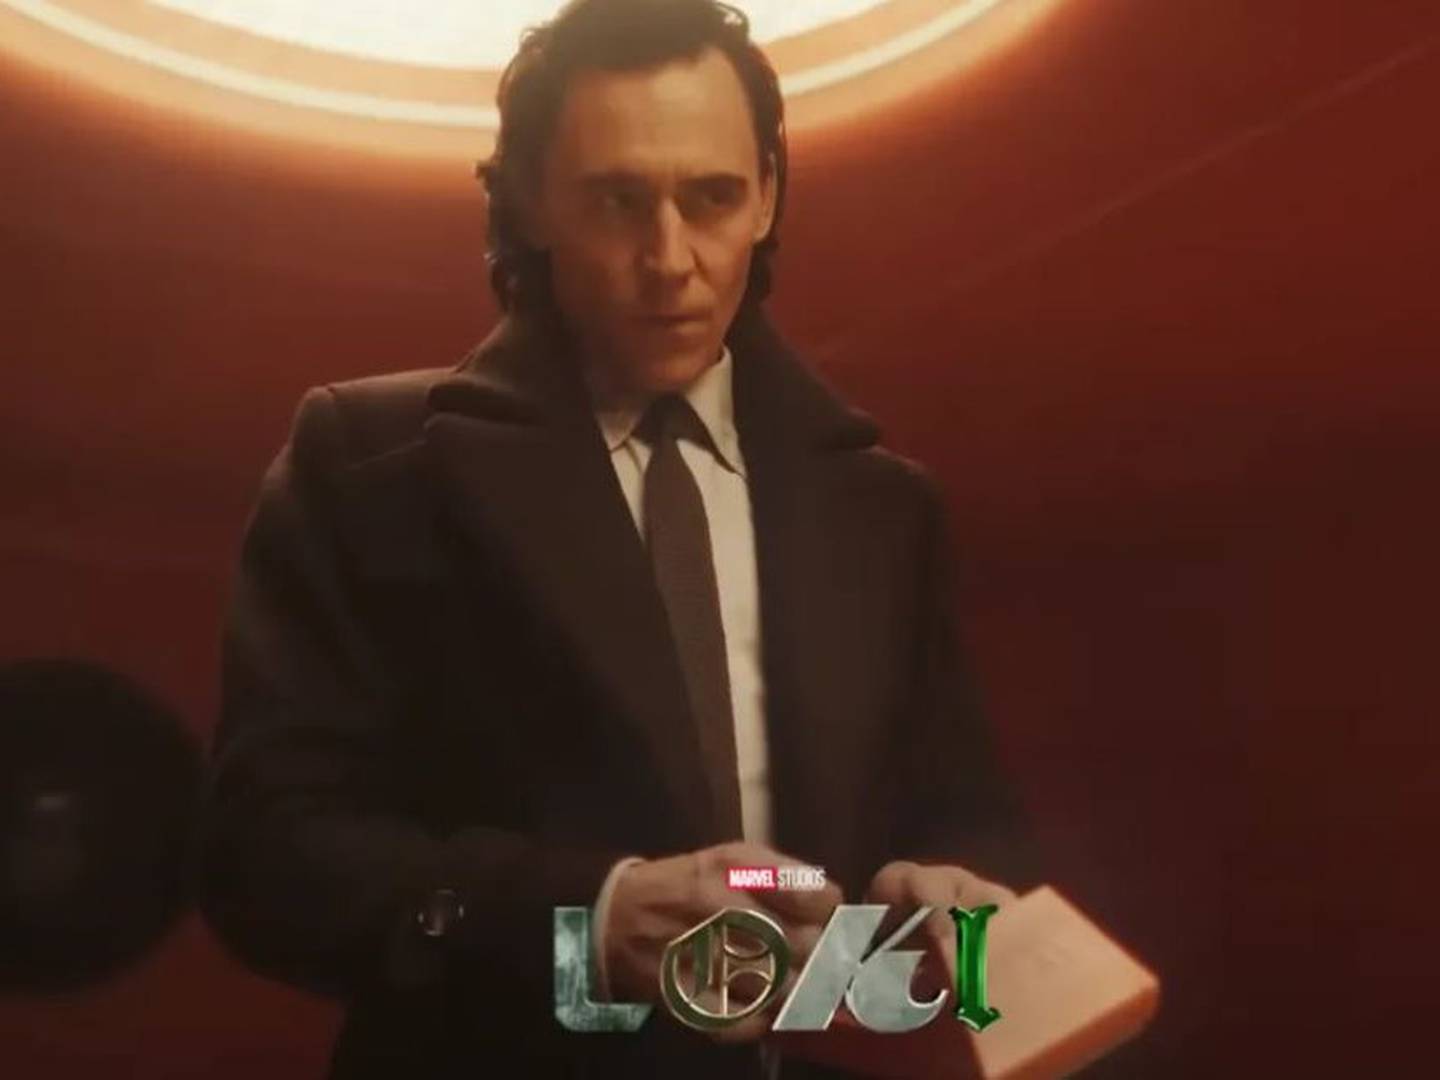 Loki temporada 2, tráiler oficial y fecha de estreno en Disney Plus: Ke  Huy Quan se luce en explosivo avance de la serie de Disney Plus con Tom  Hiddleston, Marvel